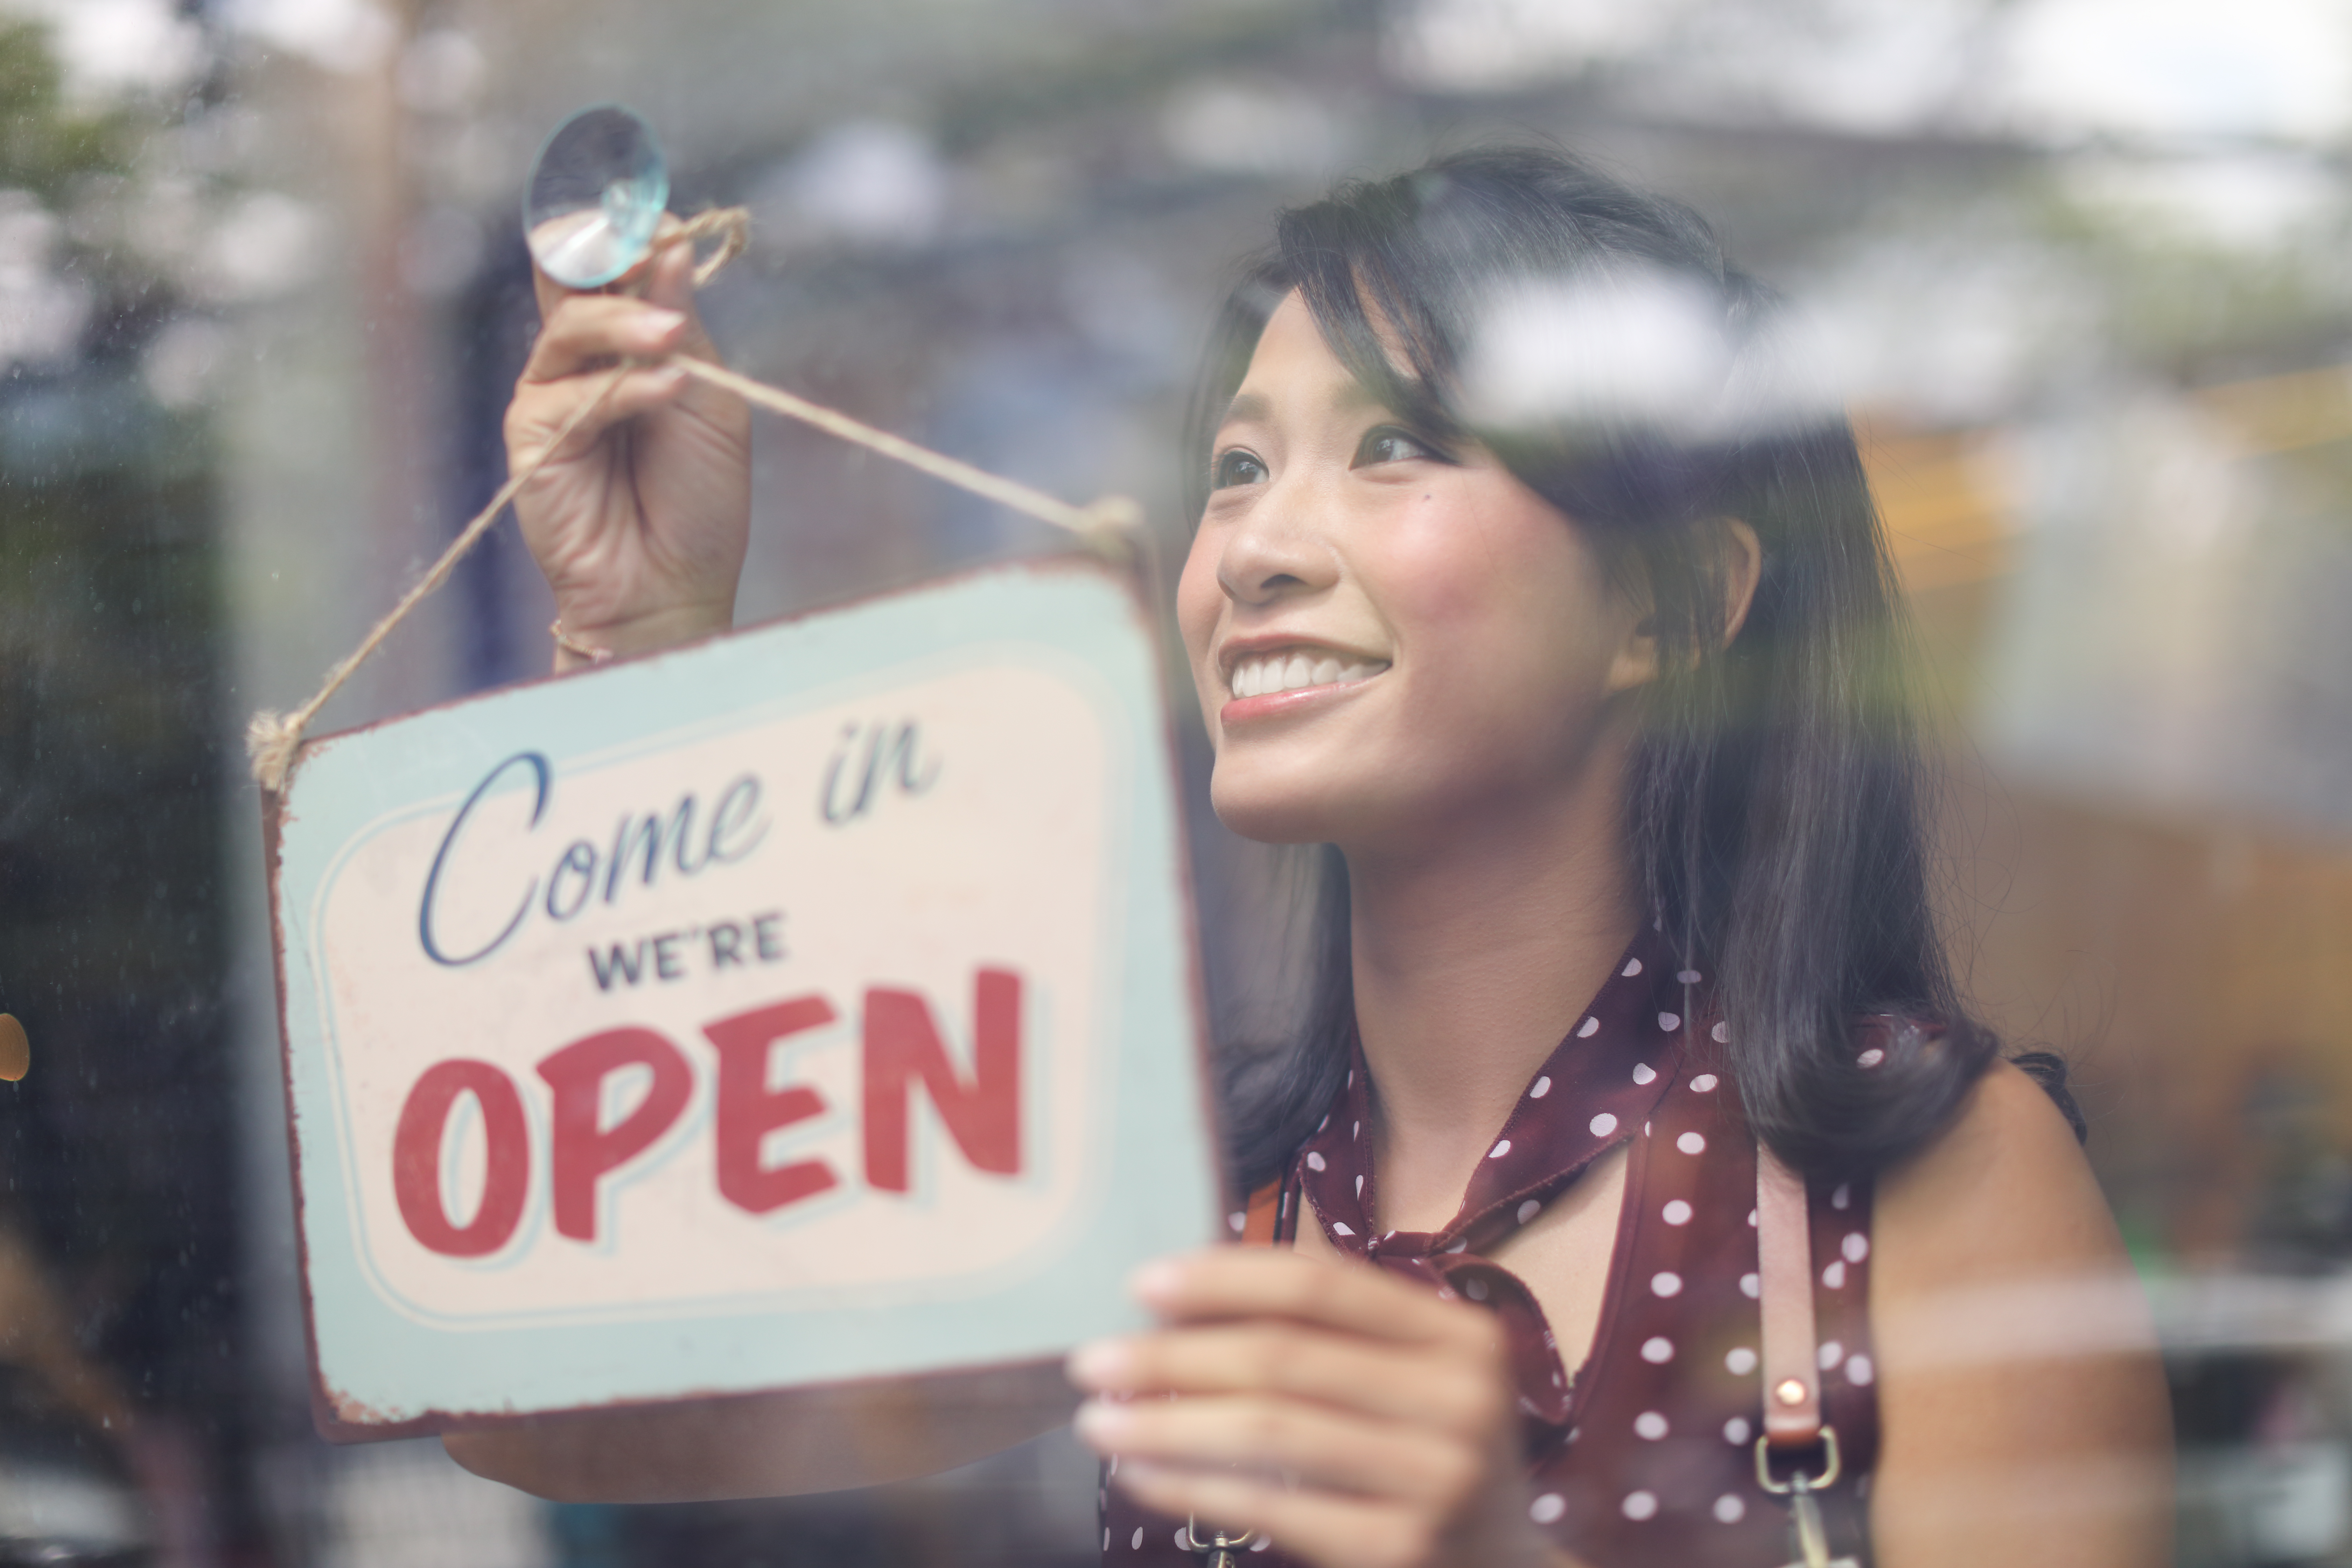 Woman hanging "Open" sign in door of small business